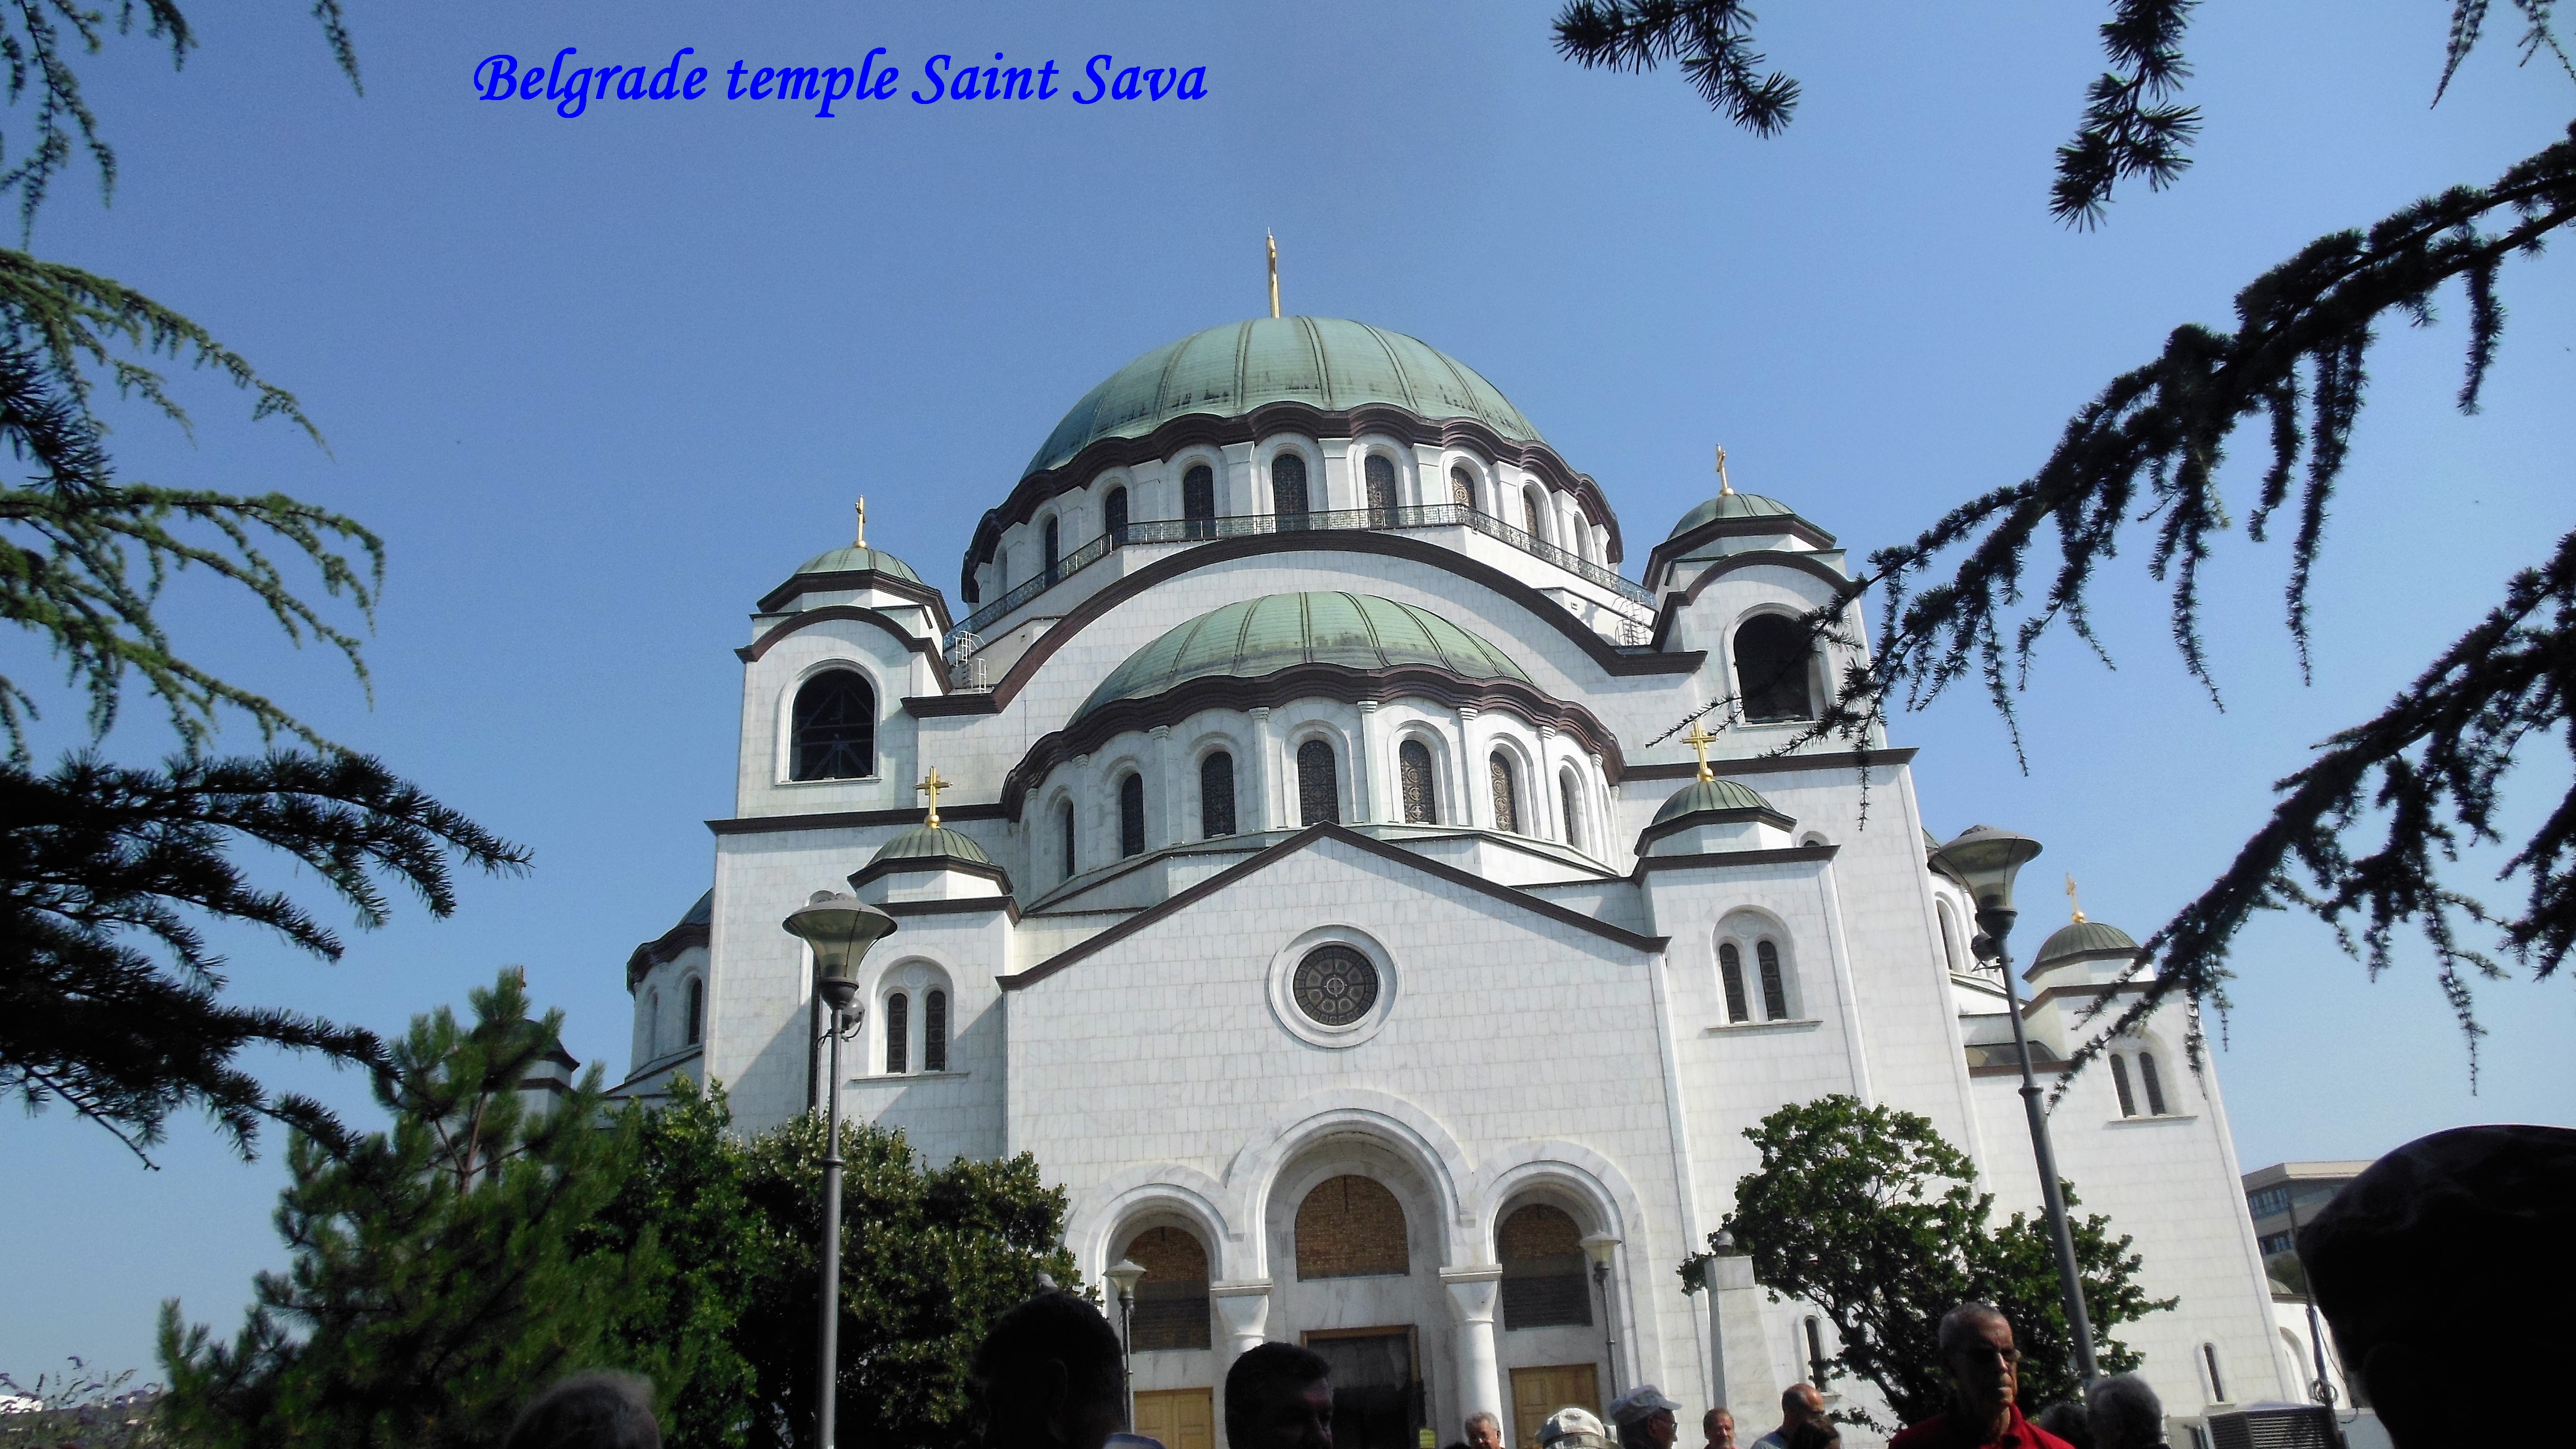 belgrade-temple-saint-sava